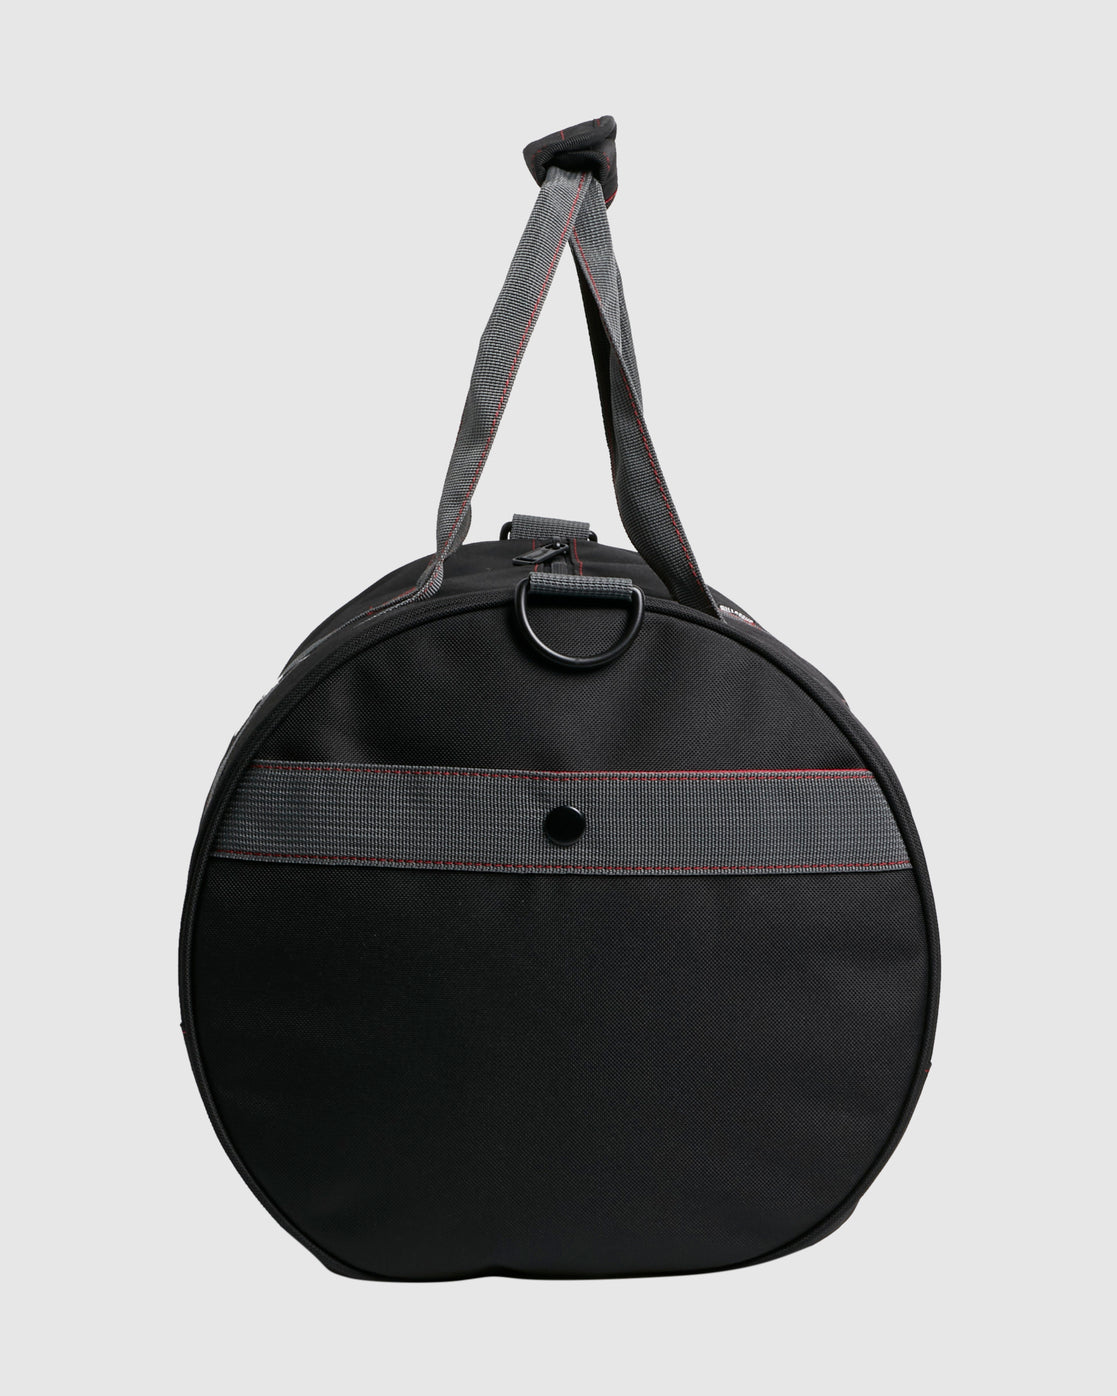 Traditional Duffle Bag